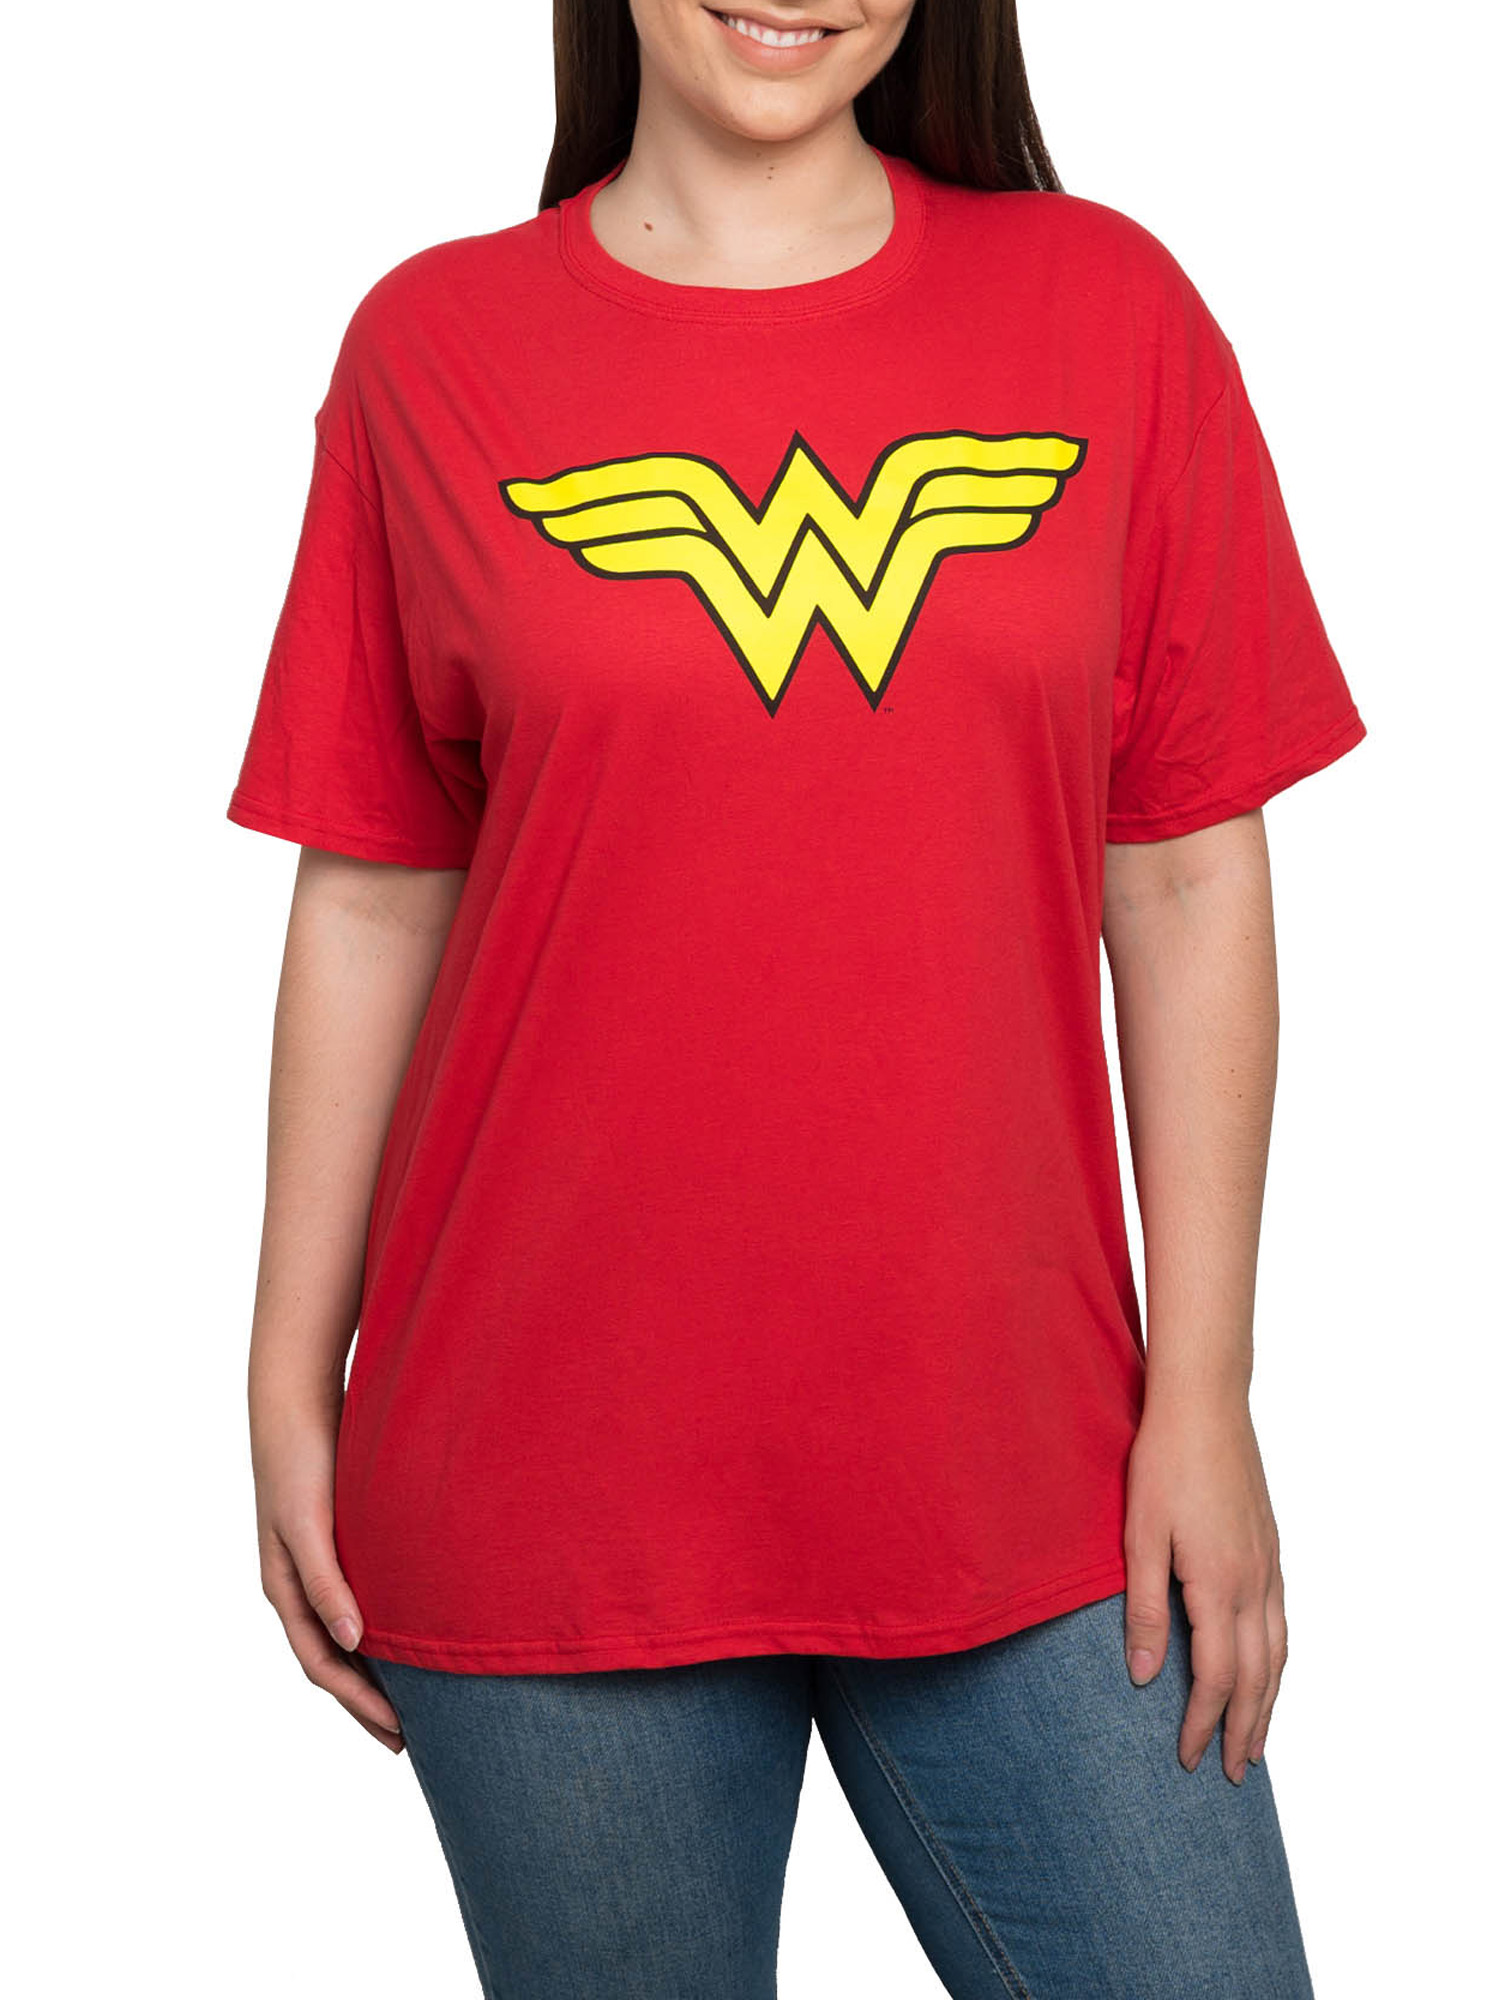 DC Comics Wonder Woman Short Sleeve T-Shirt Red (Women's Plus) - image 1 of 4